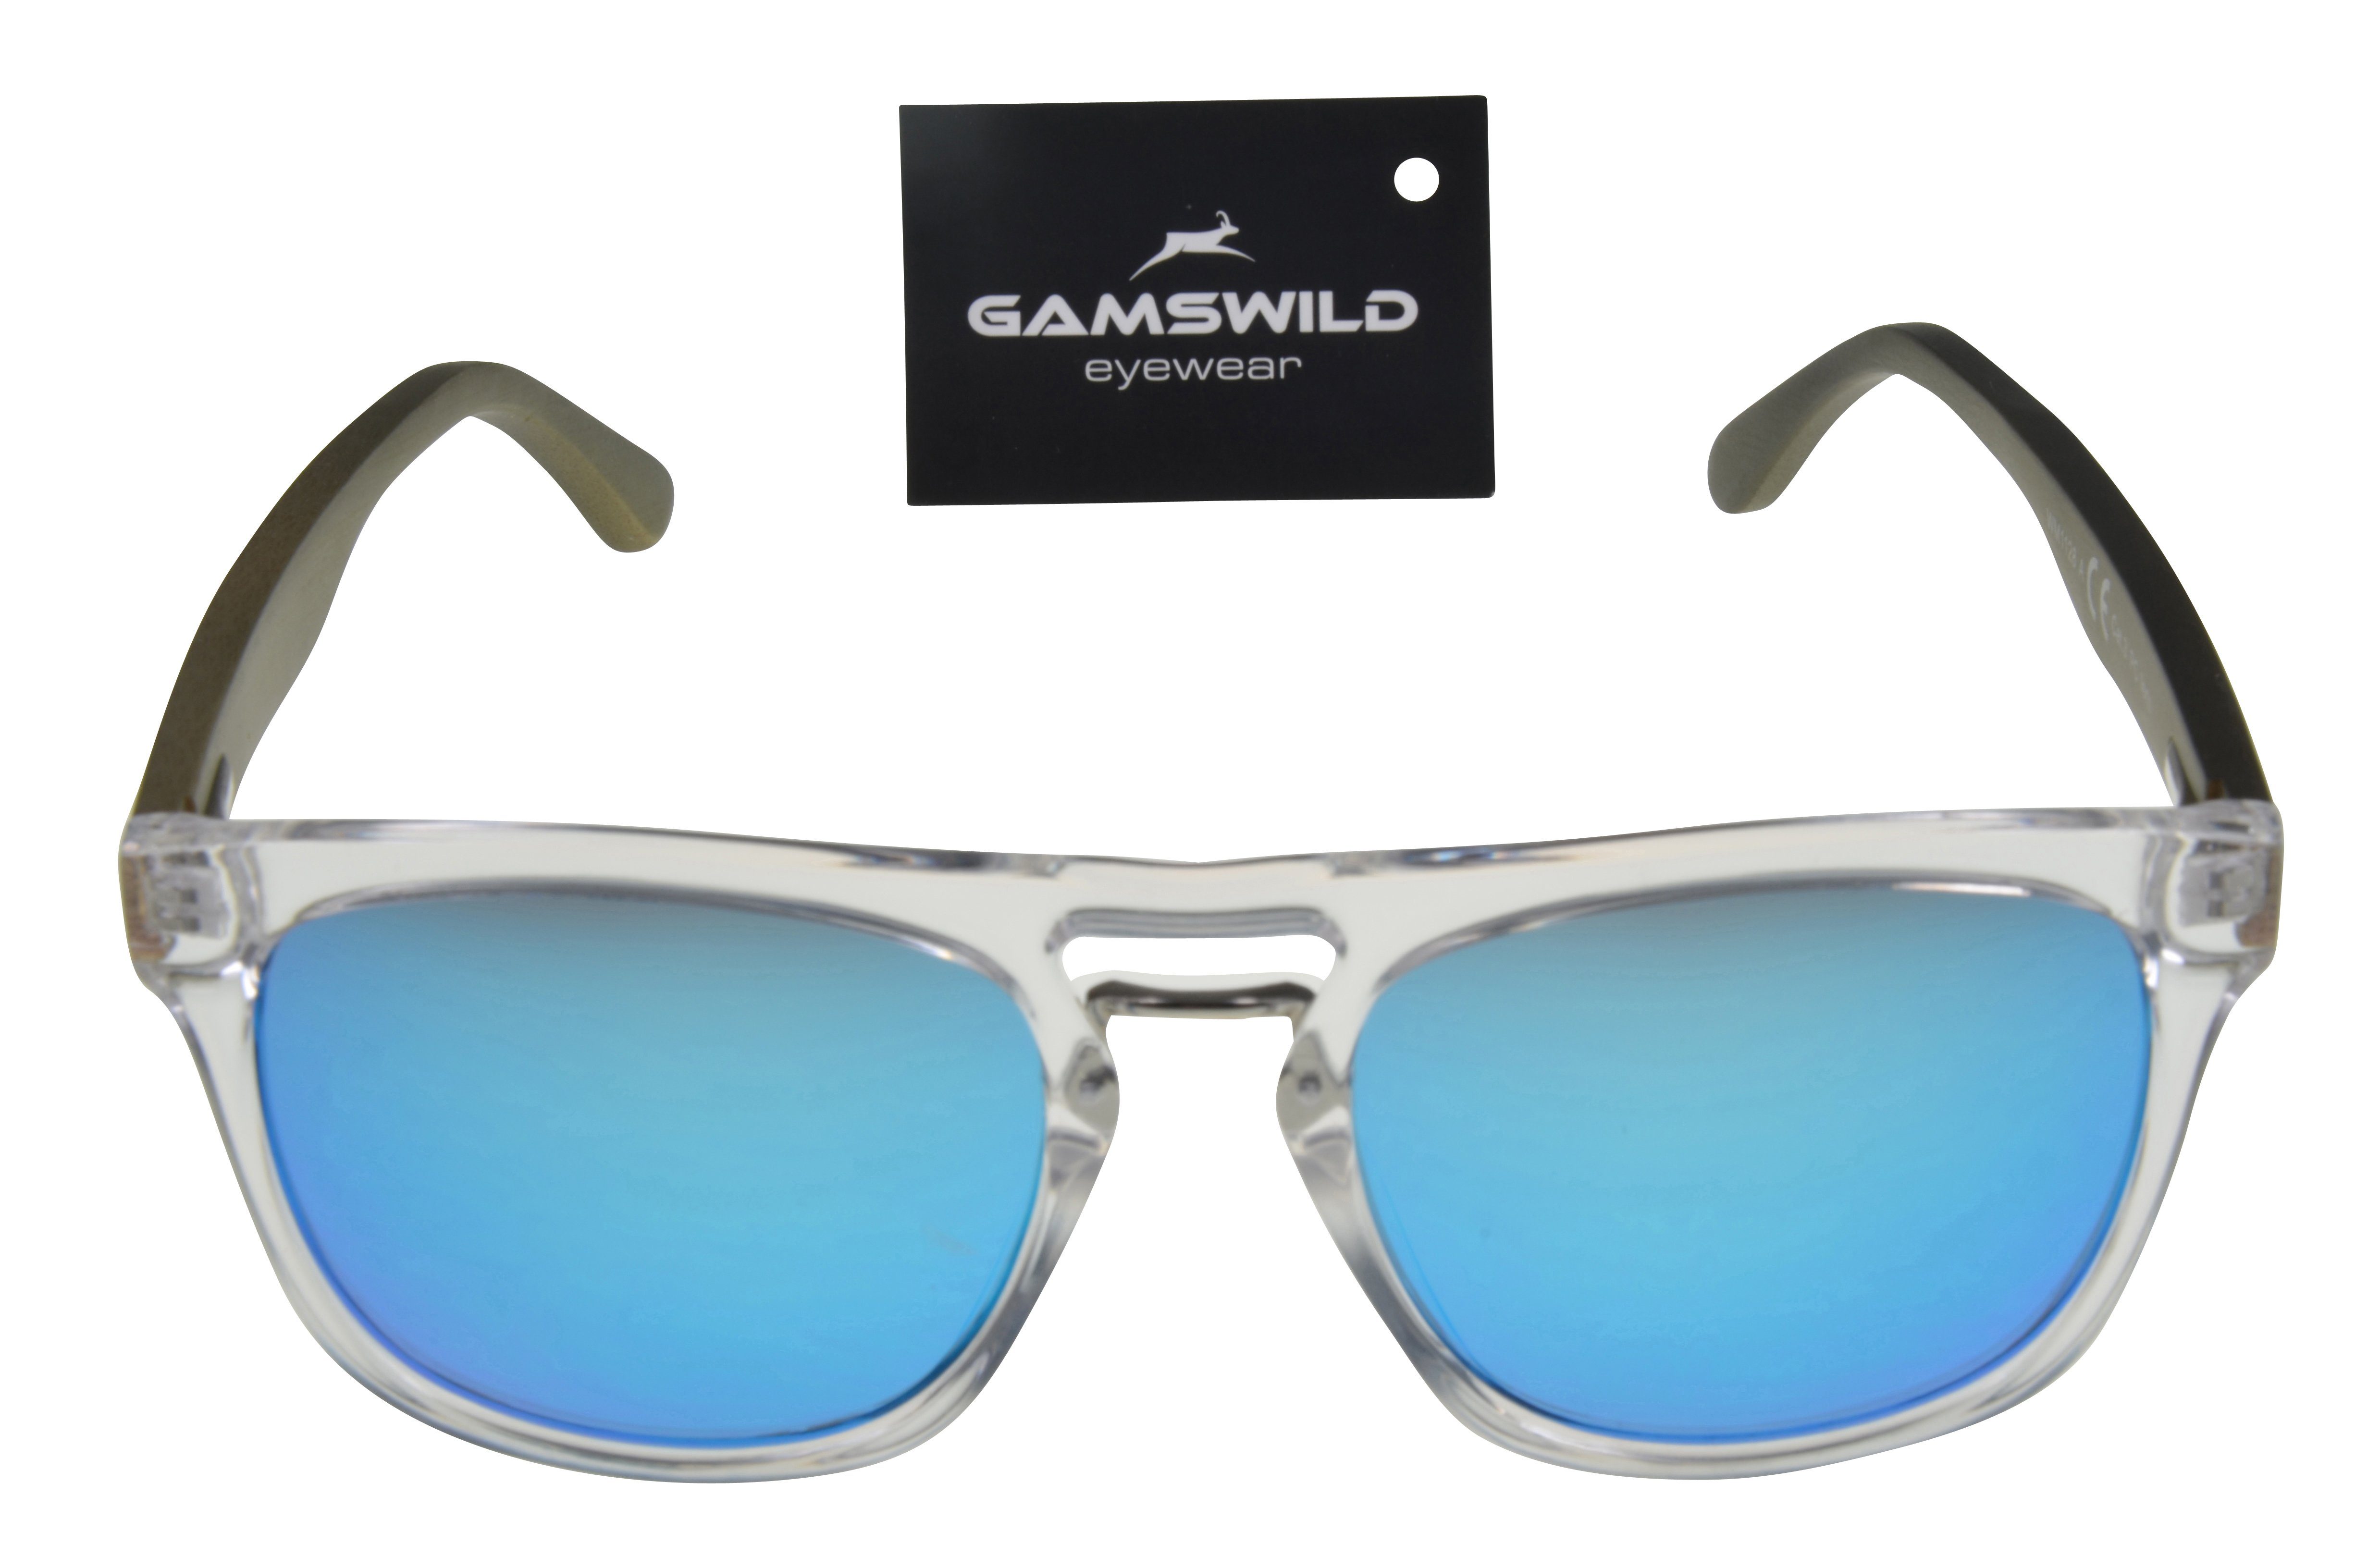 Gamswild Sonnenbrille WM1128 GAMSSTYLE blau, Unisex Herren braun Bambusholzbügel Mode rot, Brille Damen Bambusholz